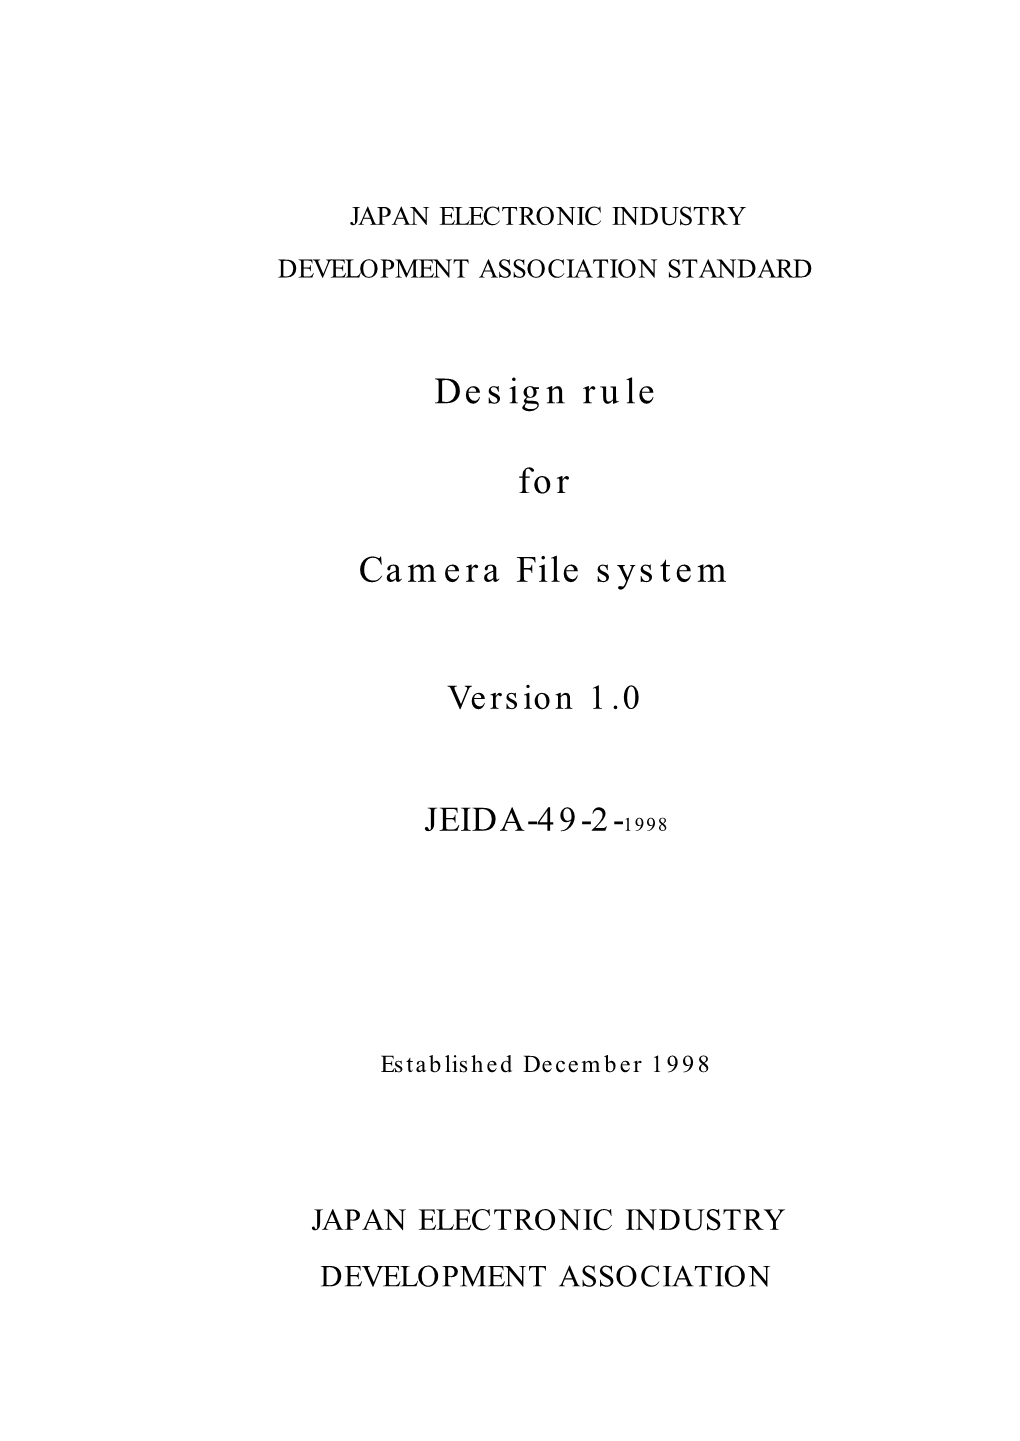 Design Rule for Camera File System